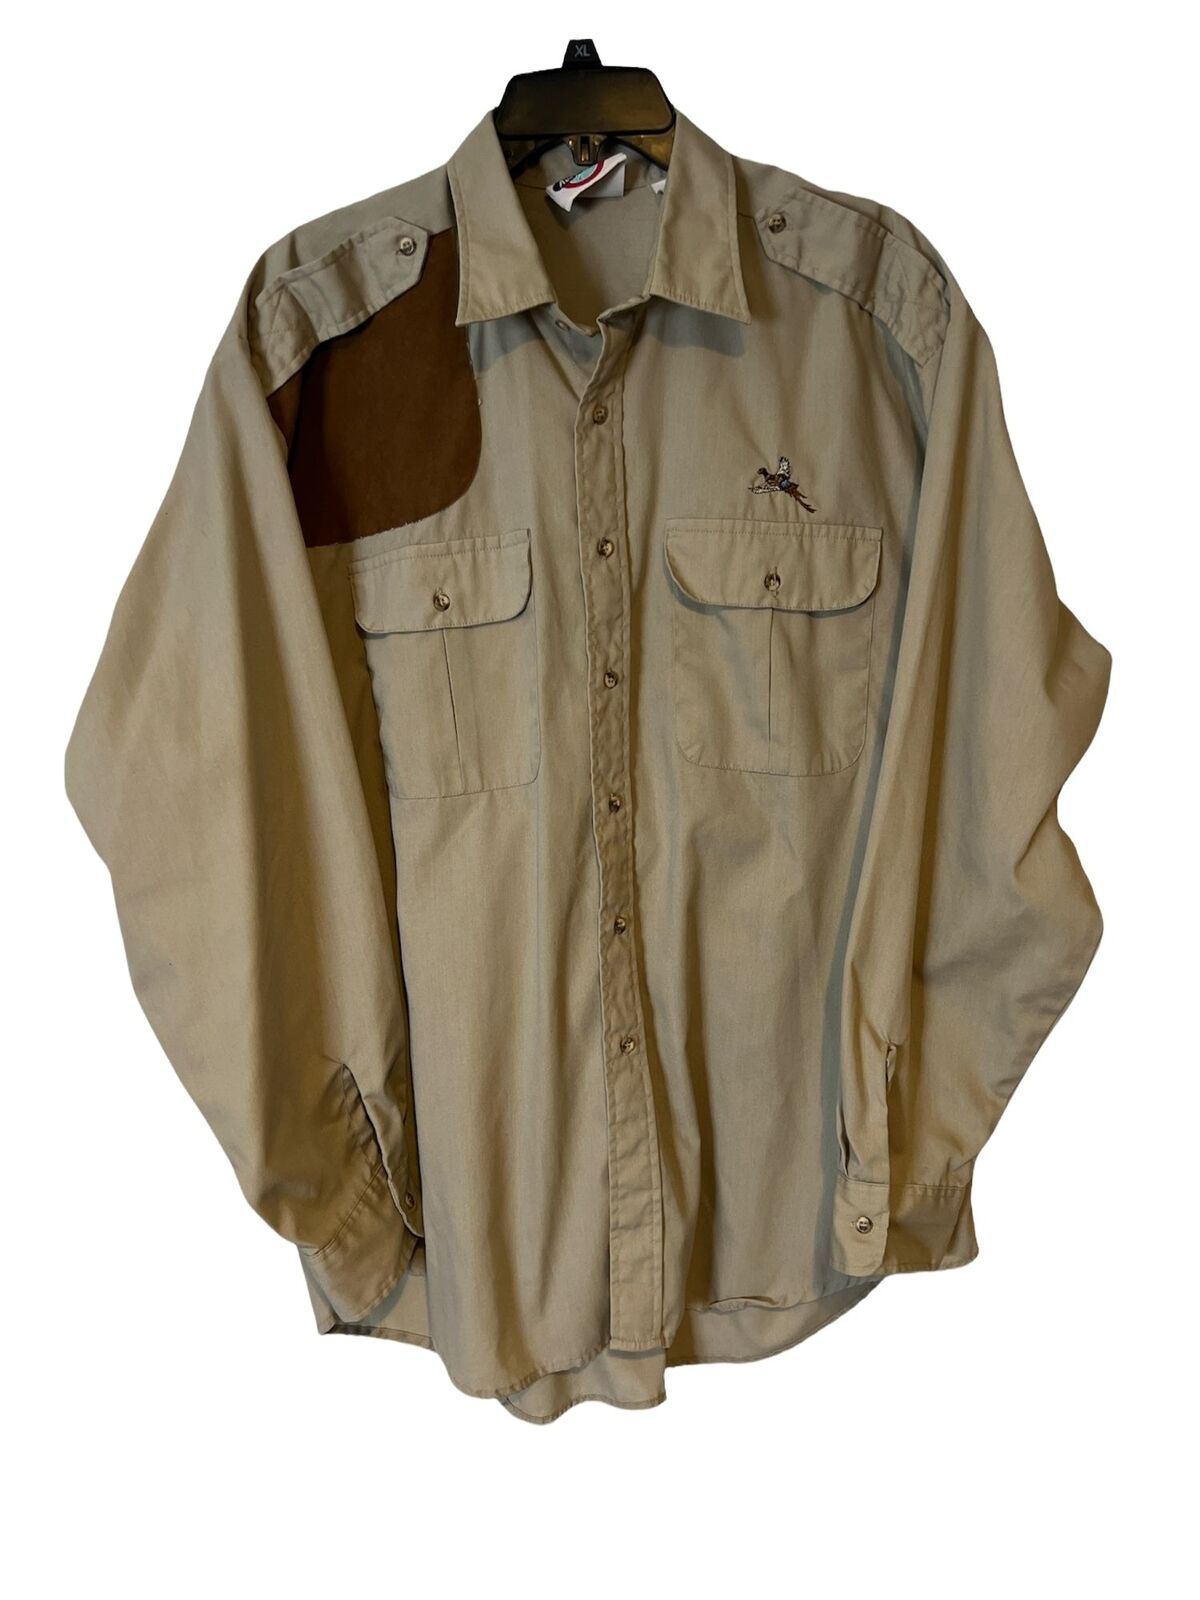 Vintage Avis Sports Hunting Safari Shooting Duck Shirt Khaki Button Up Mens XL